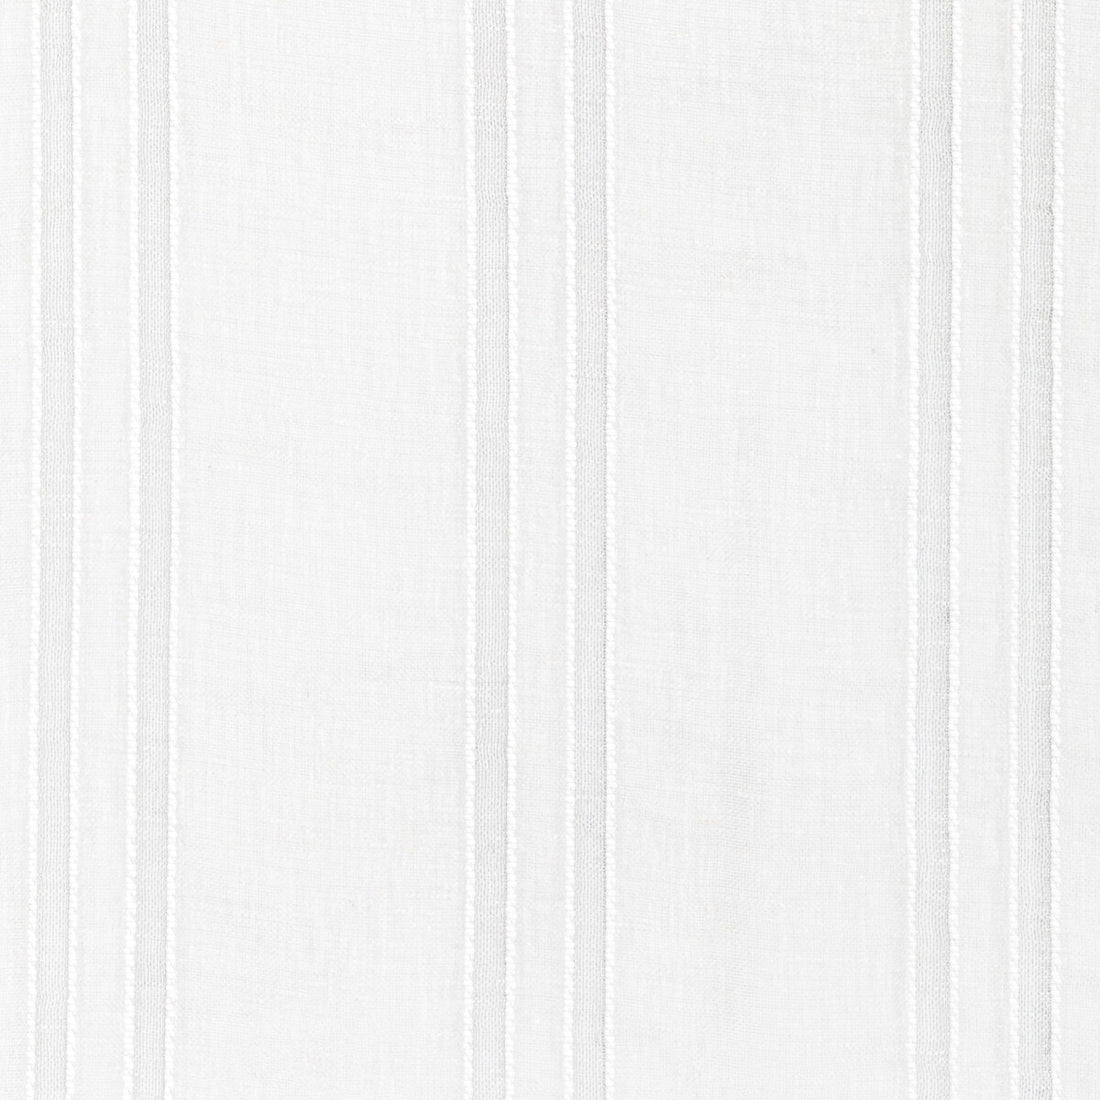 Kravet Basics fabric in 4805-1 color - pattern 4805.1.0 - by Kravet Basics in the Gis collection